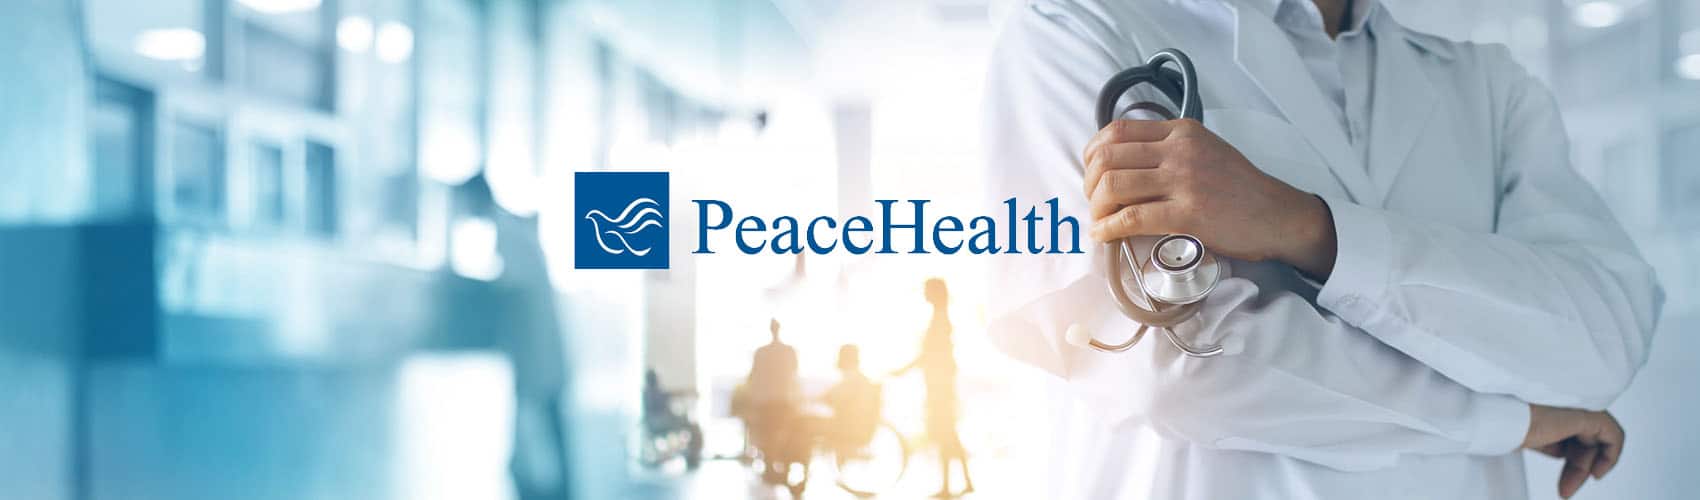 PeaceHealth hospital